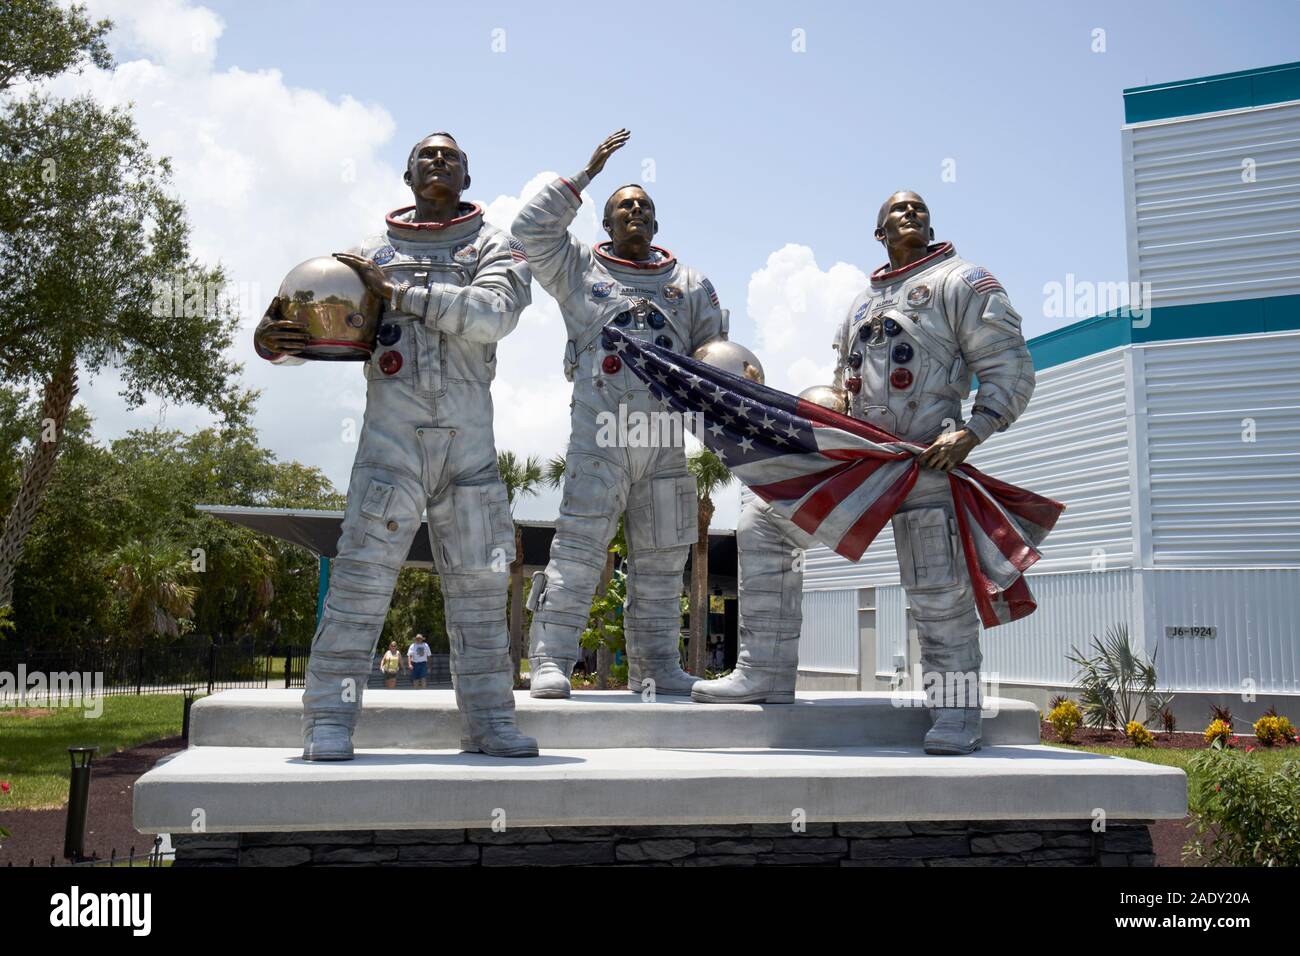 Sculpture en bronze de la nasa Apollo 11 astronautes Neil Armstrong, Buzz Aldrin et Michael Collins à moon tree garden centre spatial Kennedy en Floride usa Banque D'Images